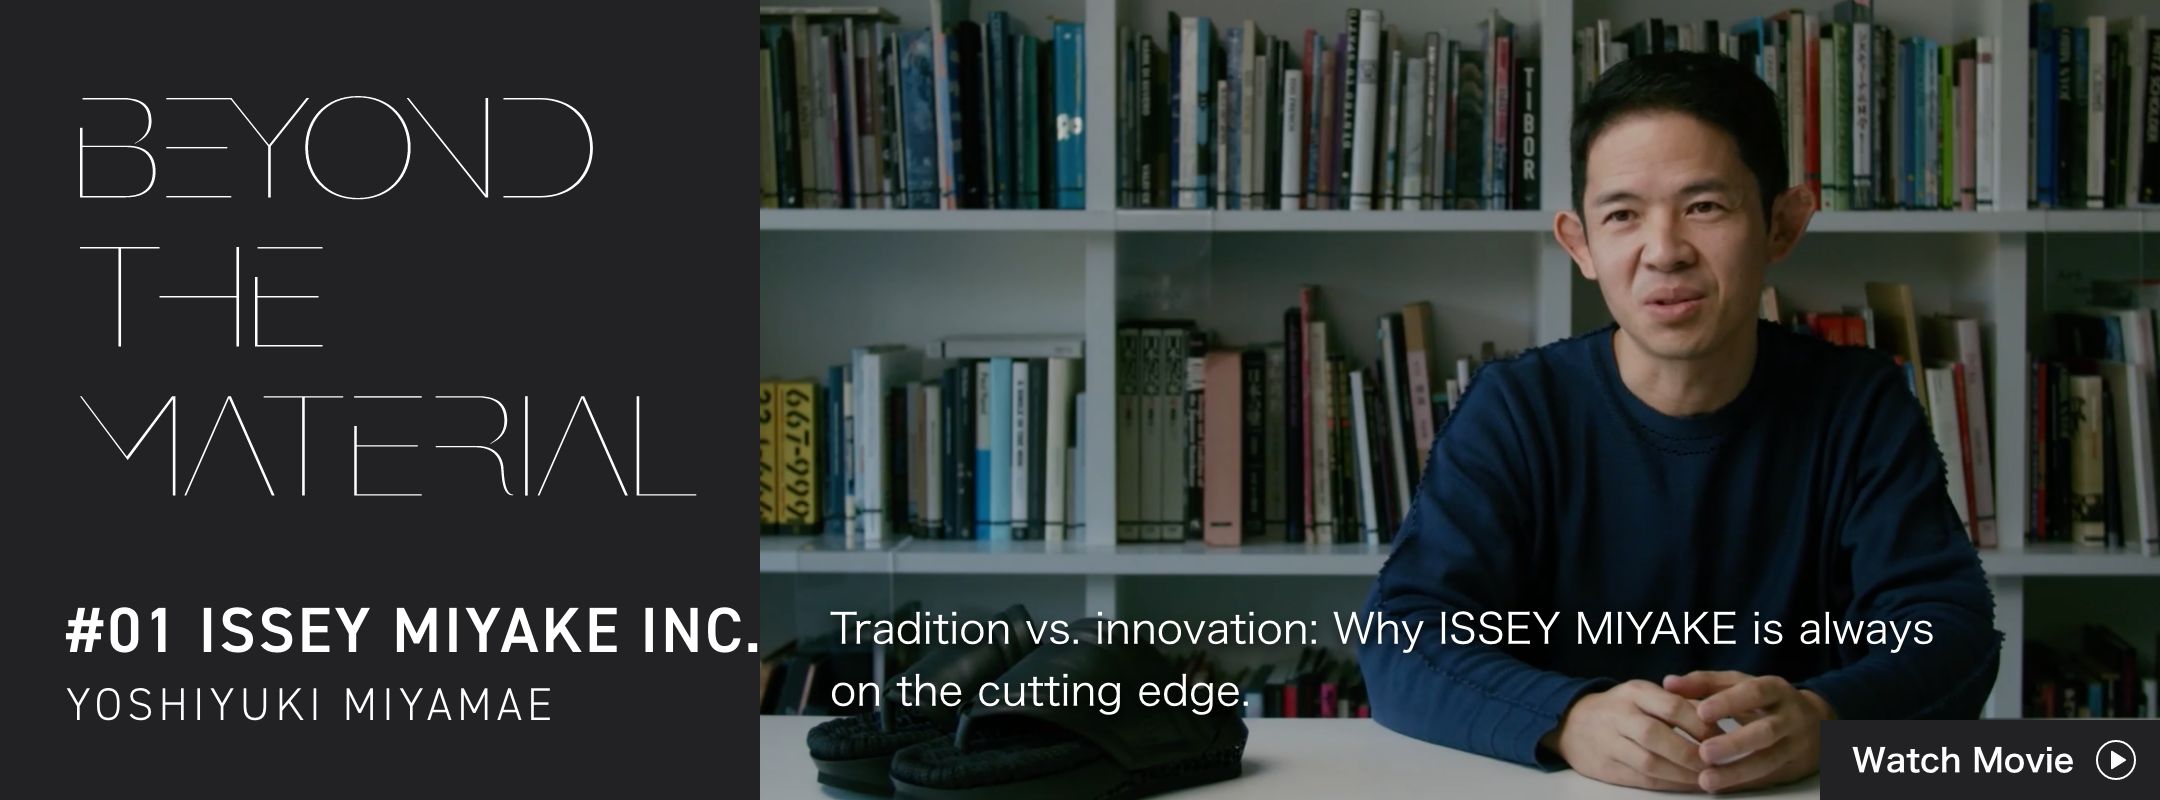 BEYOND THE MATERIAL #01 ISSEY MIYAKE INC. YOSHIYUKI MIYAMAE Tradition vs. innovation: Why ISSEY MIYAKE is always on the cutting edge.